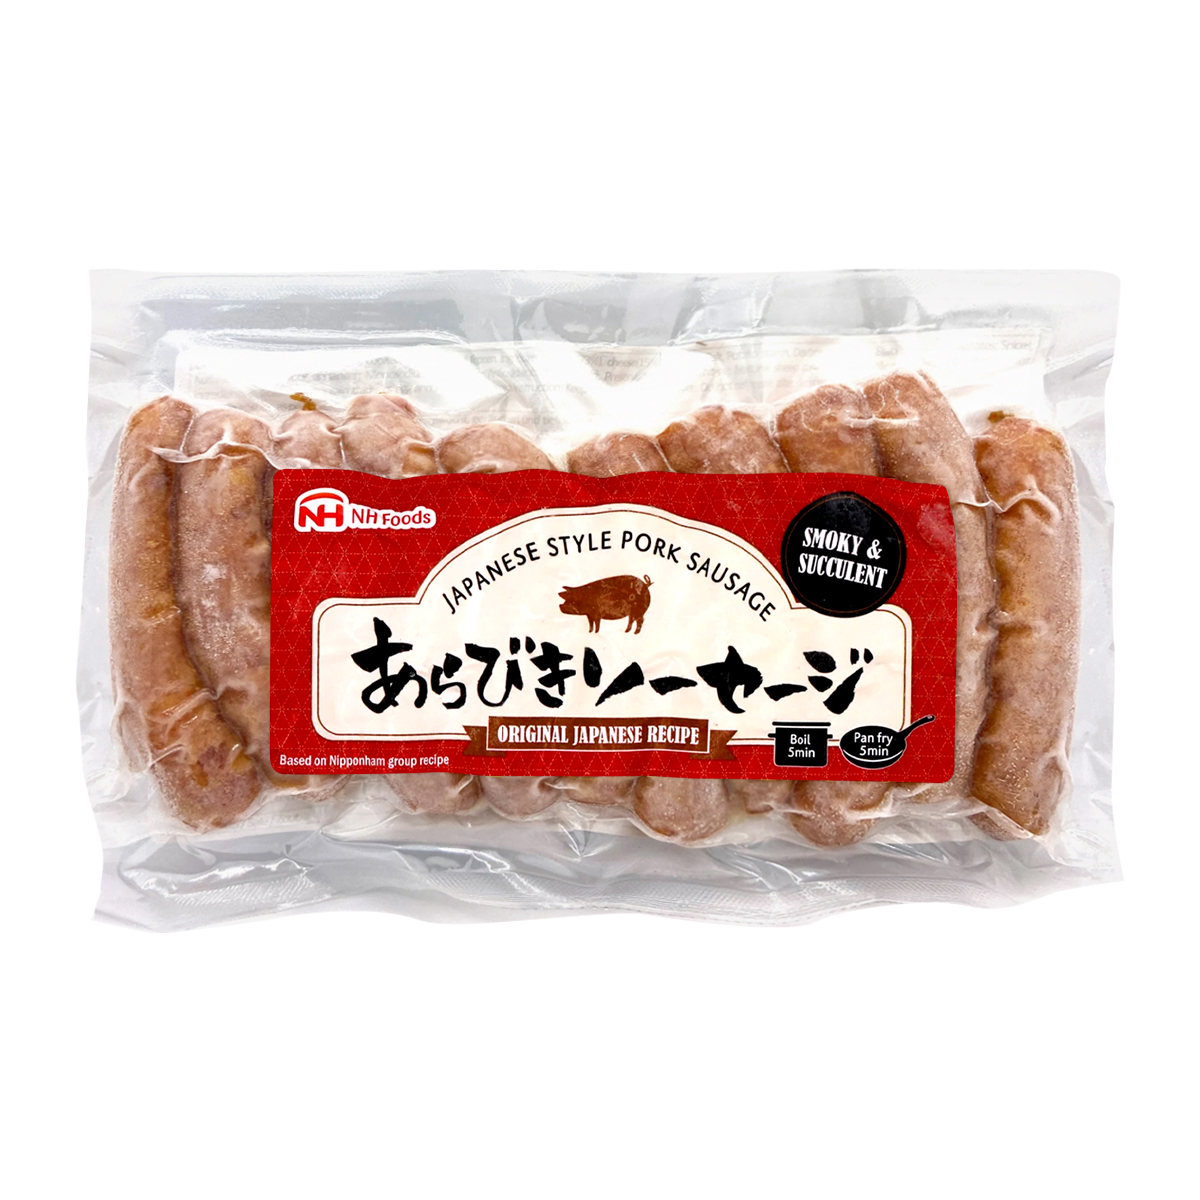 Exclusiv in magazine - Japanese Style Pork sausage (smokey) NH FOODS 200g, asianfood.ro